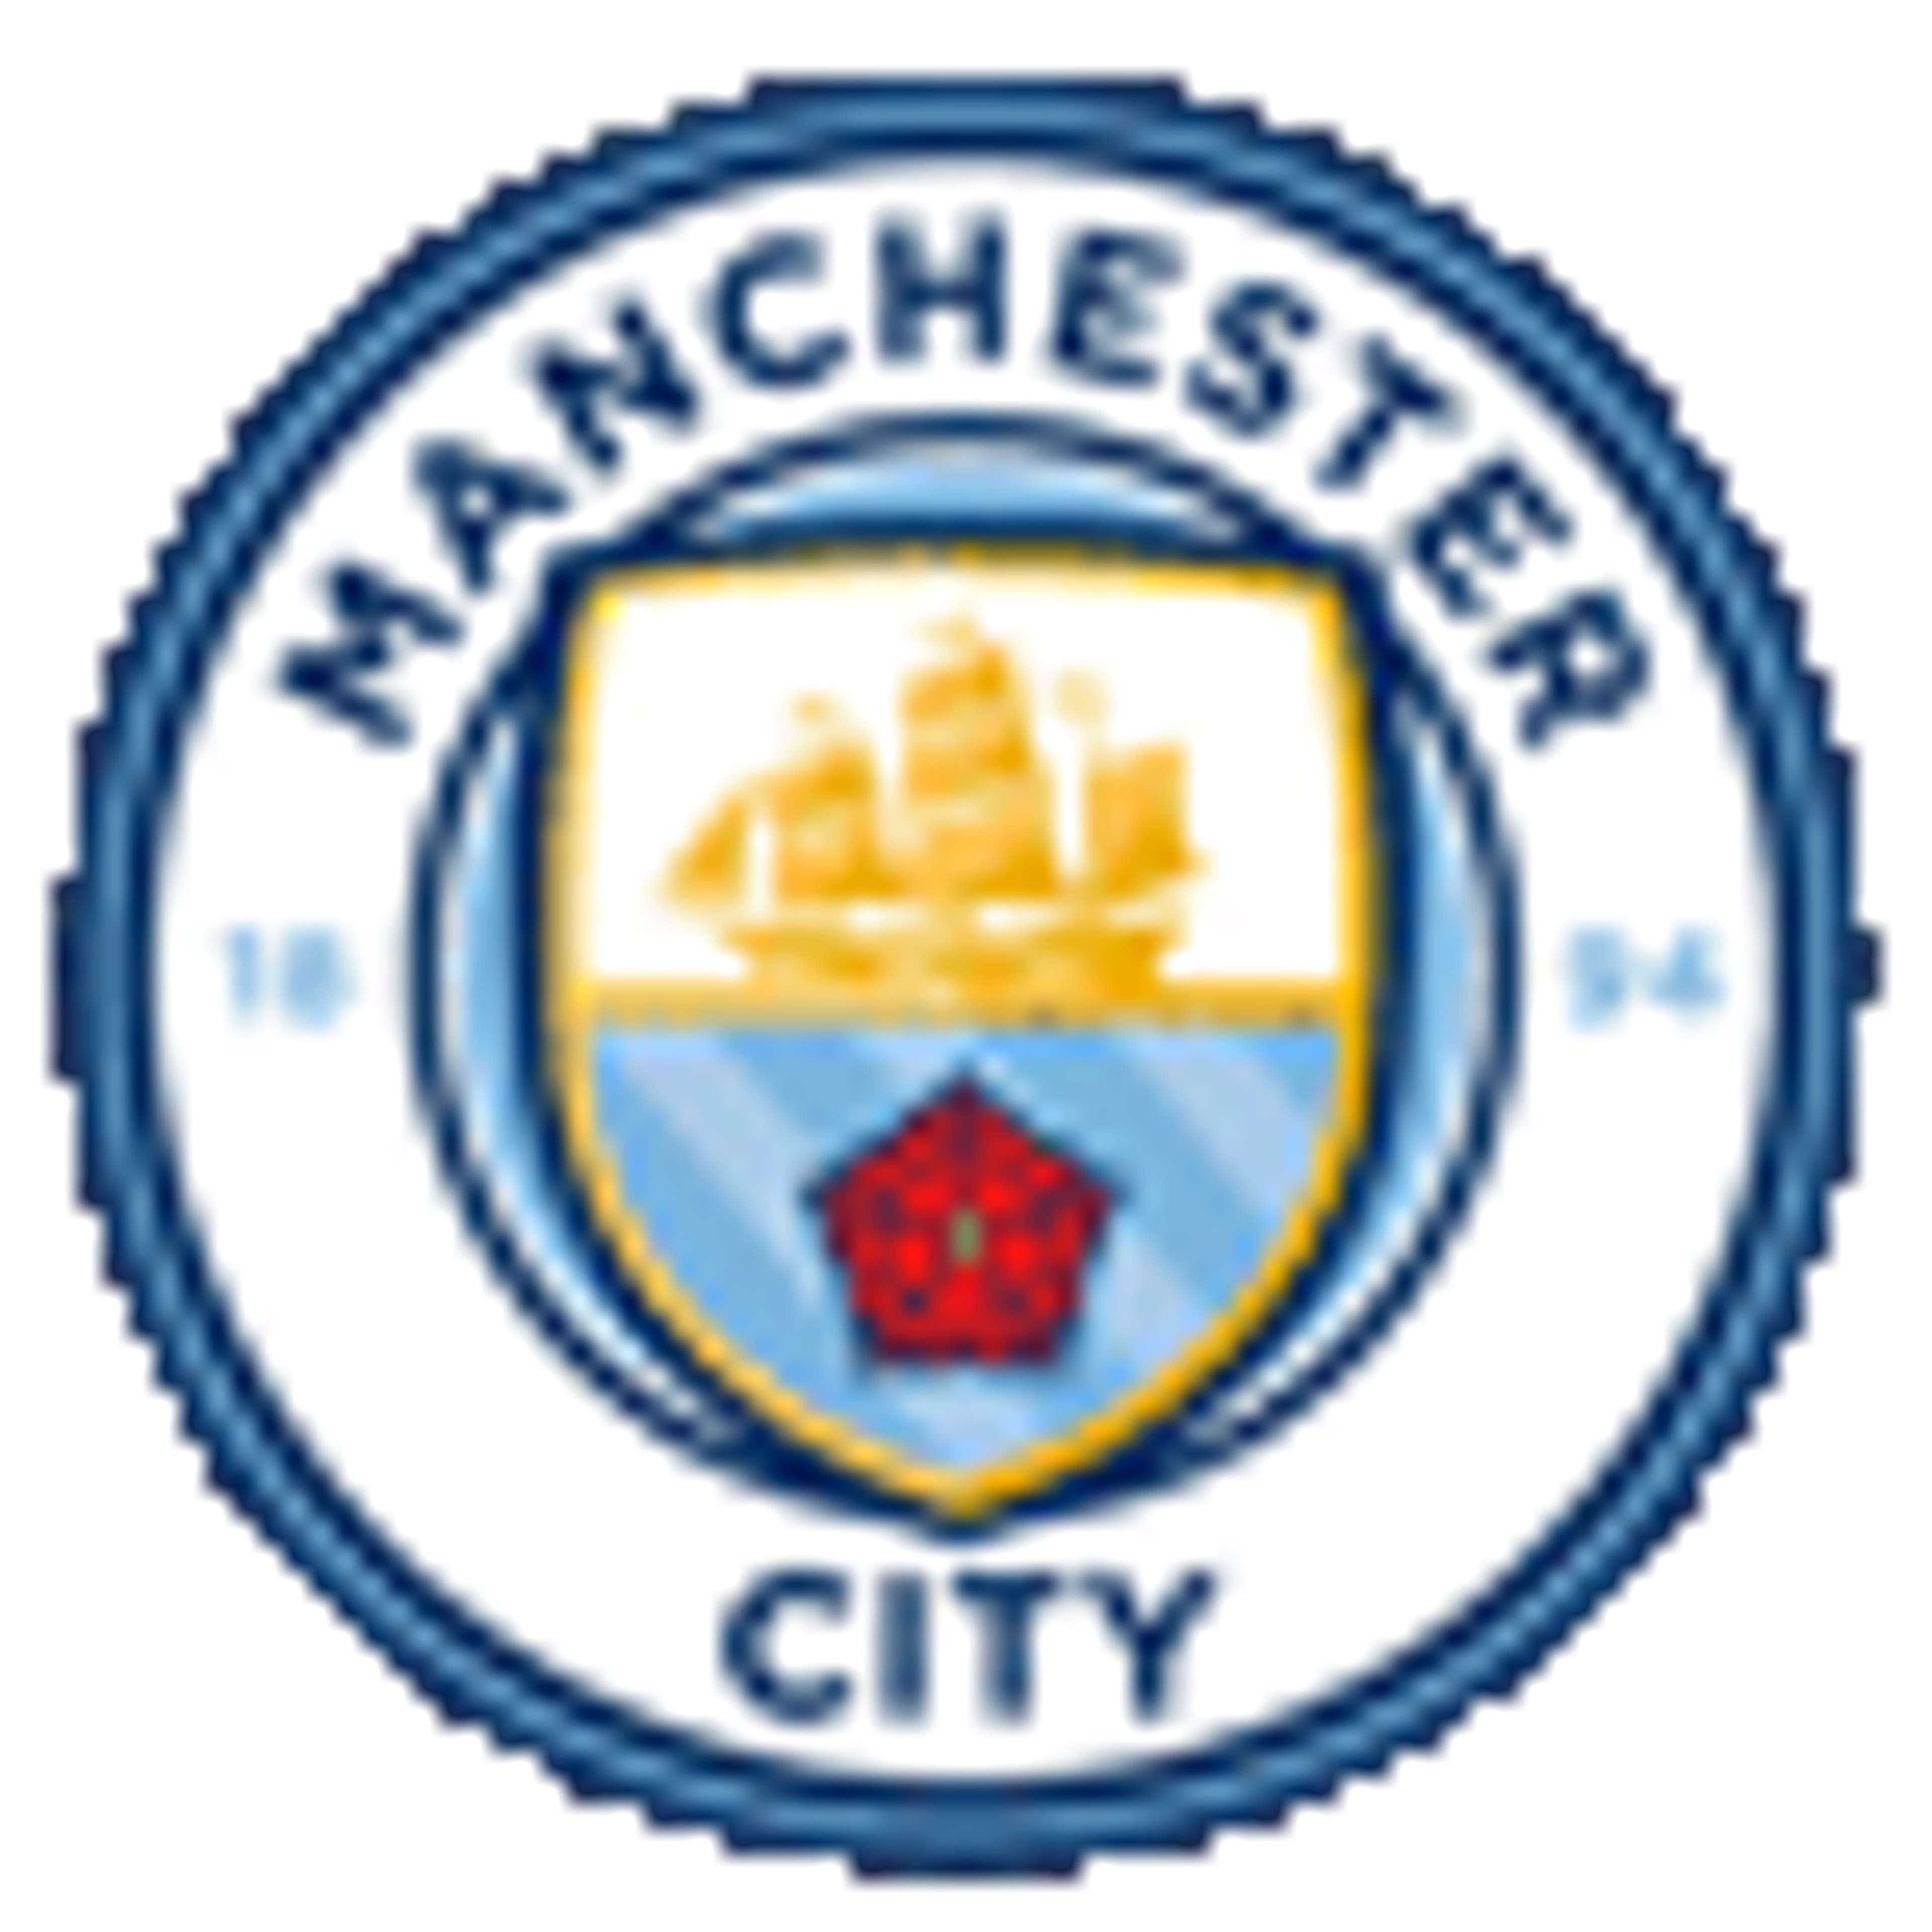 Escudo Manchester City